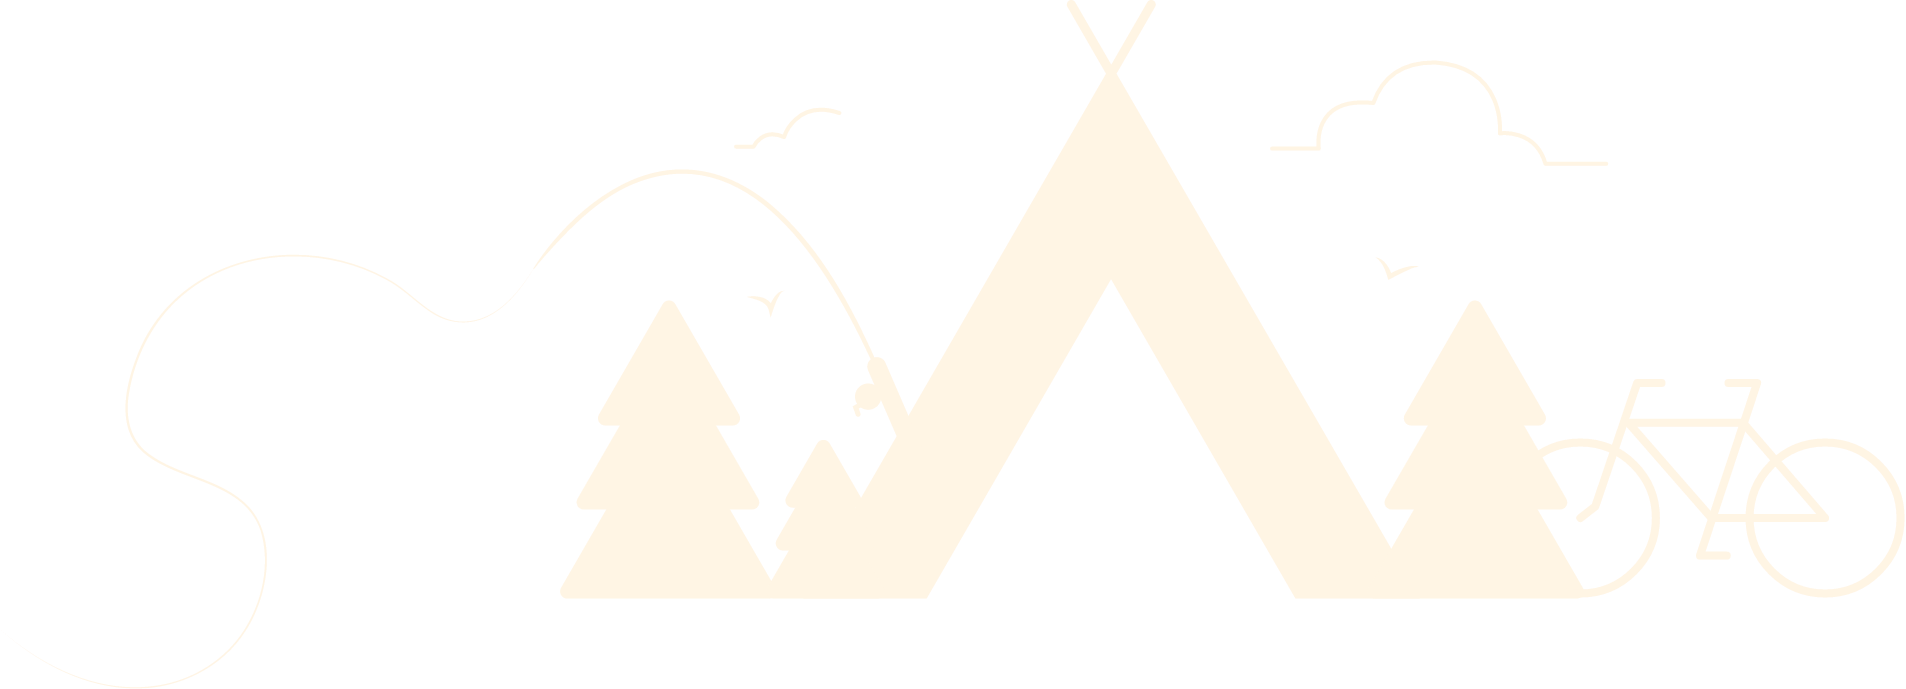 fjelliv-logo